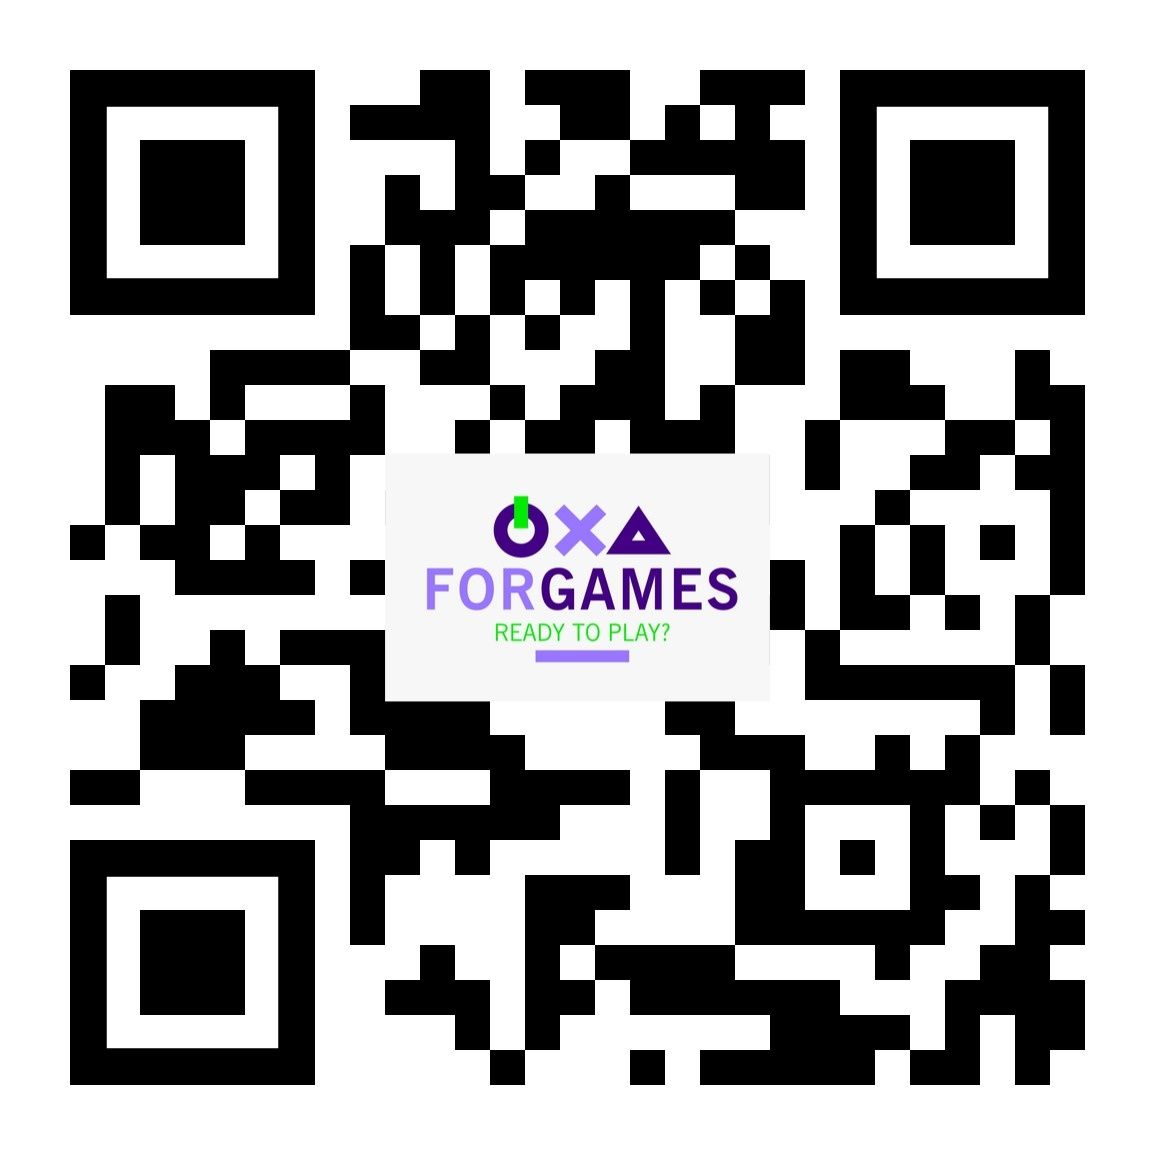 Horizon Forbbiden West PS4 Zero Dawn Complete Edition PS4 Forgames